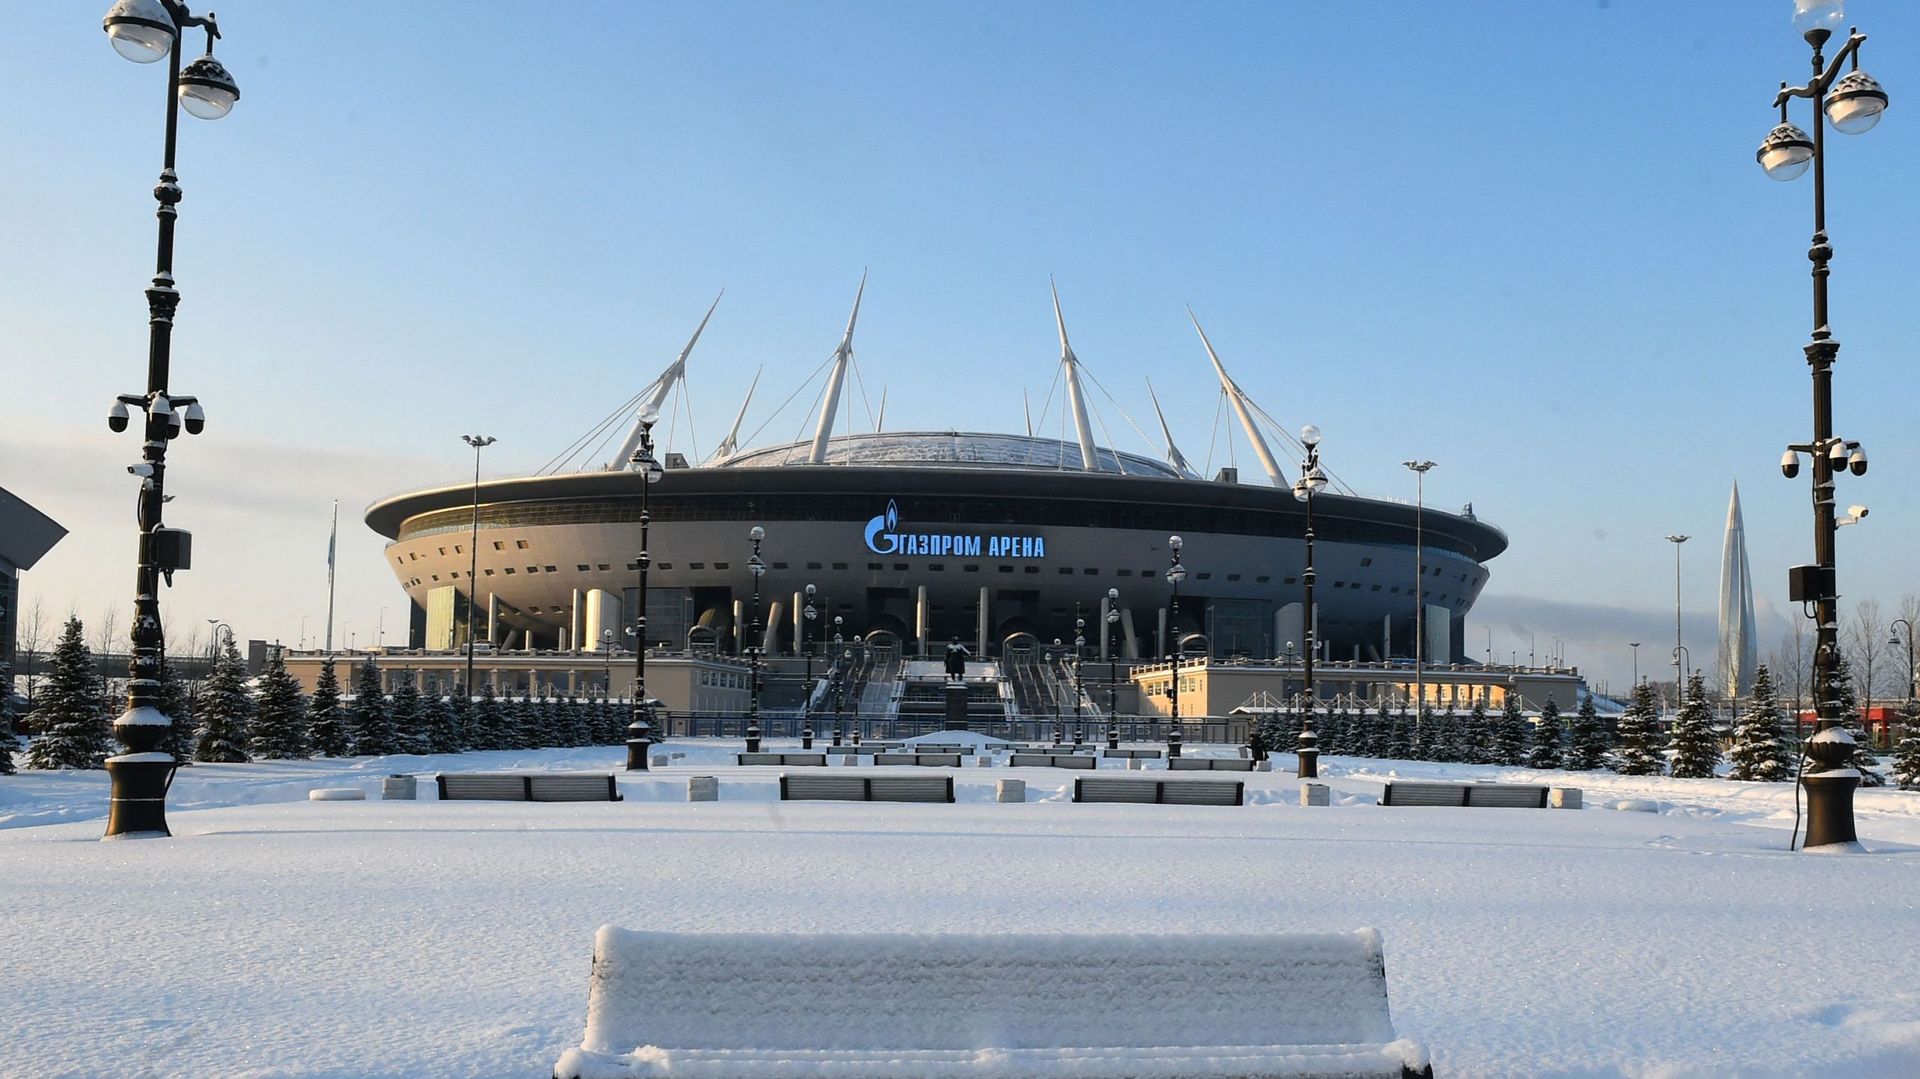  La Gazprom Arena de Saint-Petersbourg